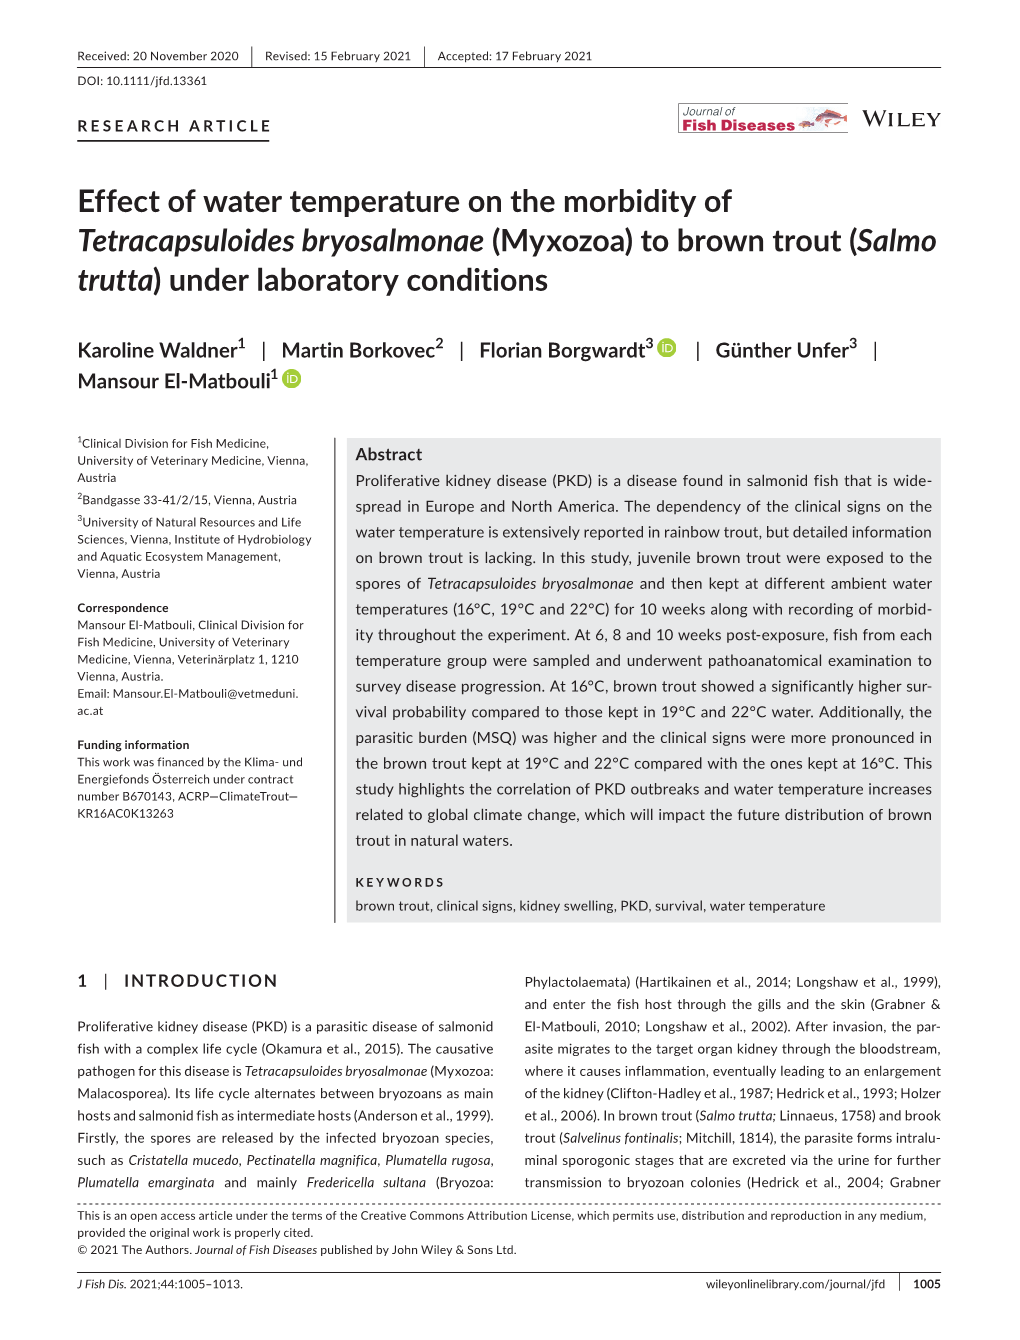 Effect of Water Temperature on the Morbidity of Tetracapsuloides Bryosalmonae (Myxozoa) to Brown Trout (Salmo Trutta) Under Laboratory Conditions